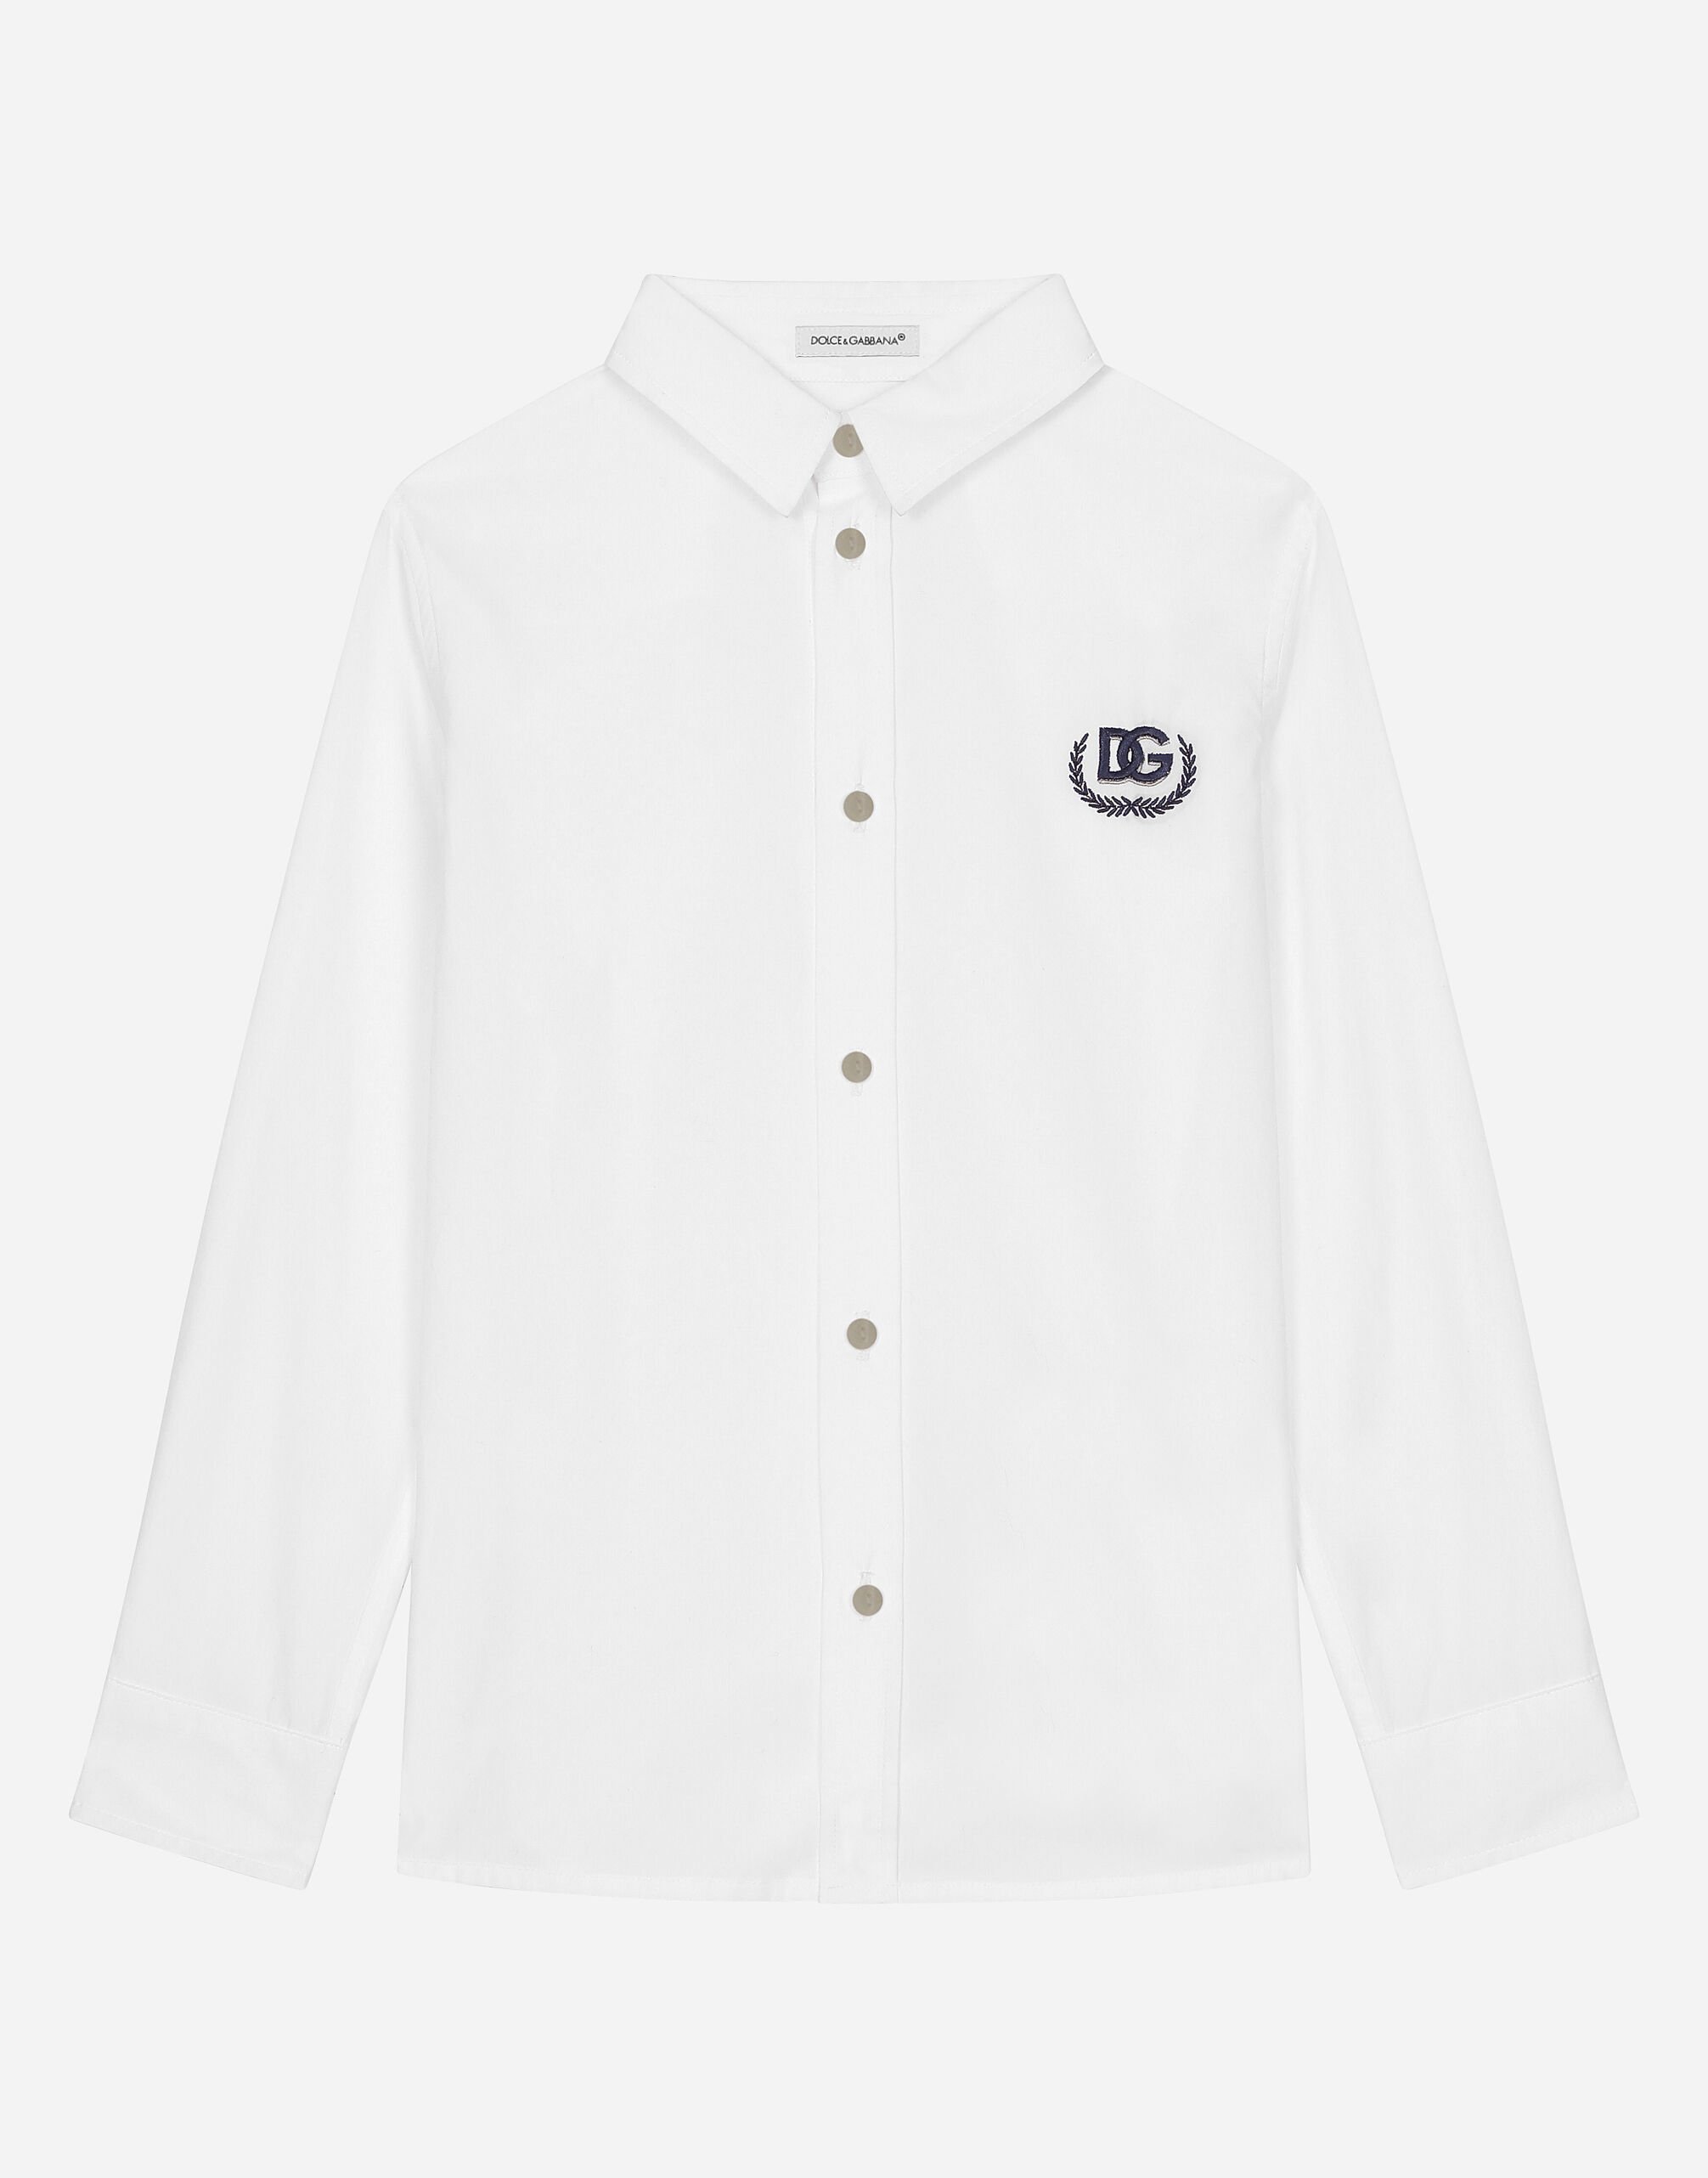 ${brand} Poplin shirt with DG laurel logo ${colorDescription} ${masterID}